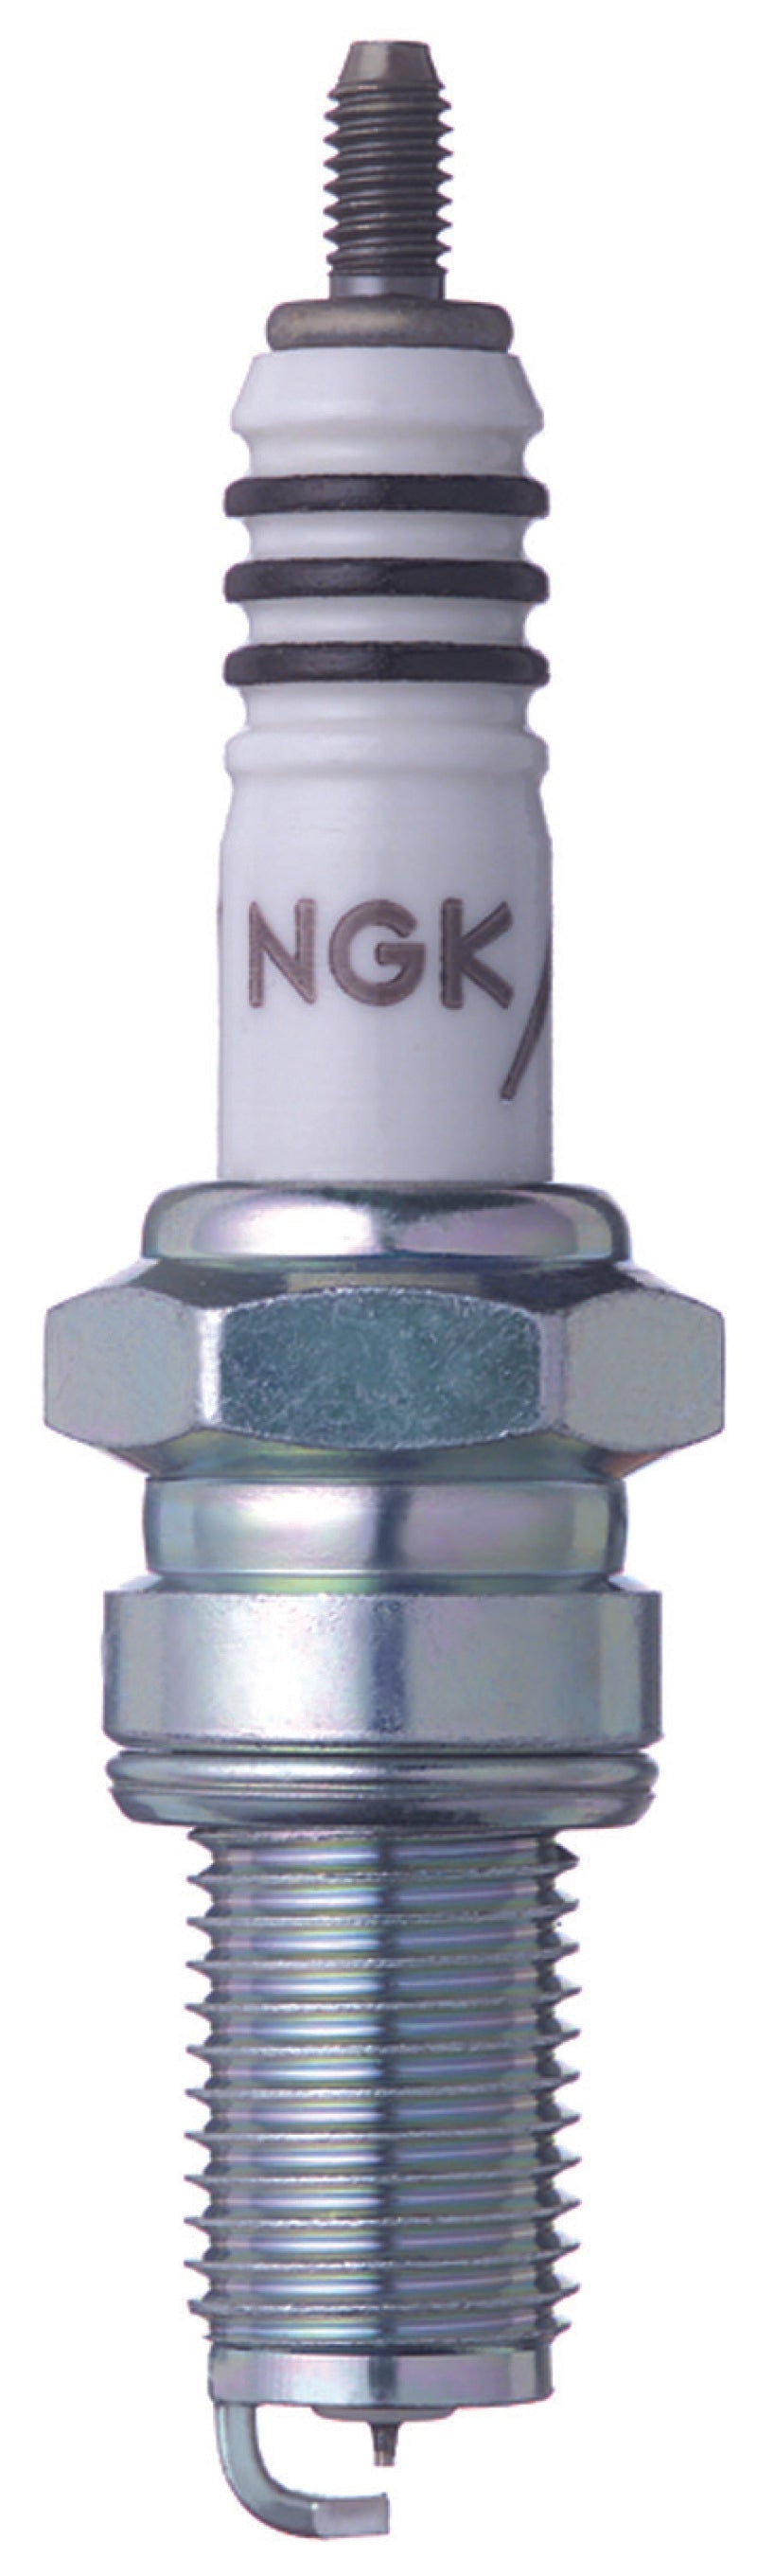 NGK Iridium IX Spark Plug Box of 4 (DR7EIX)